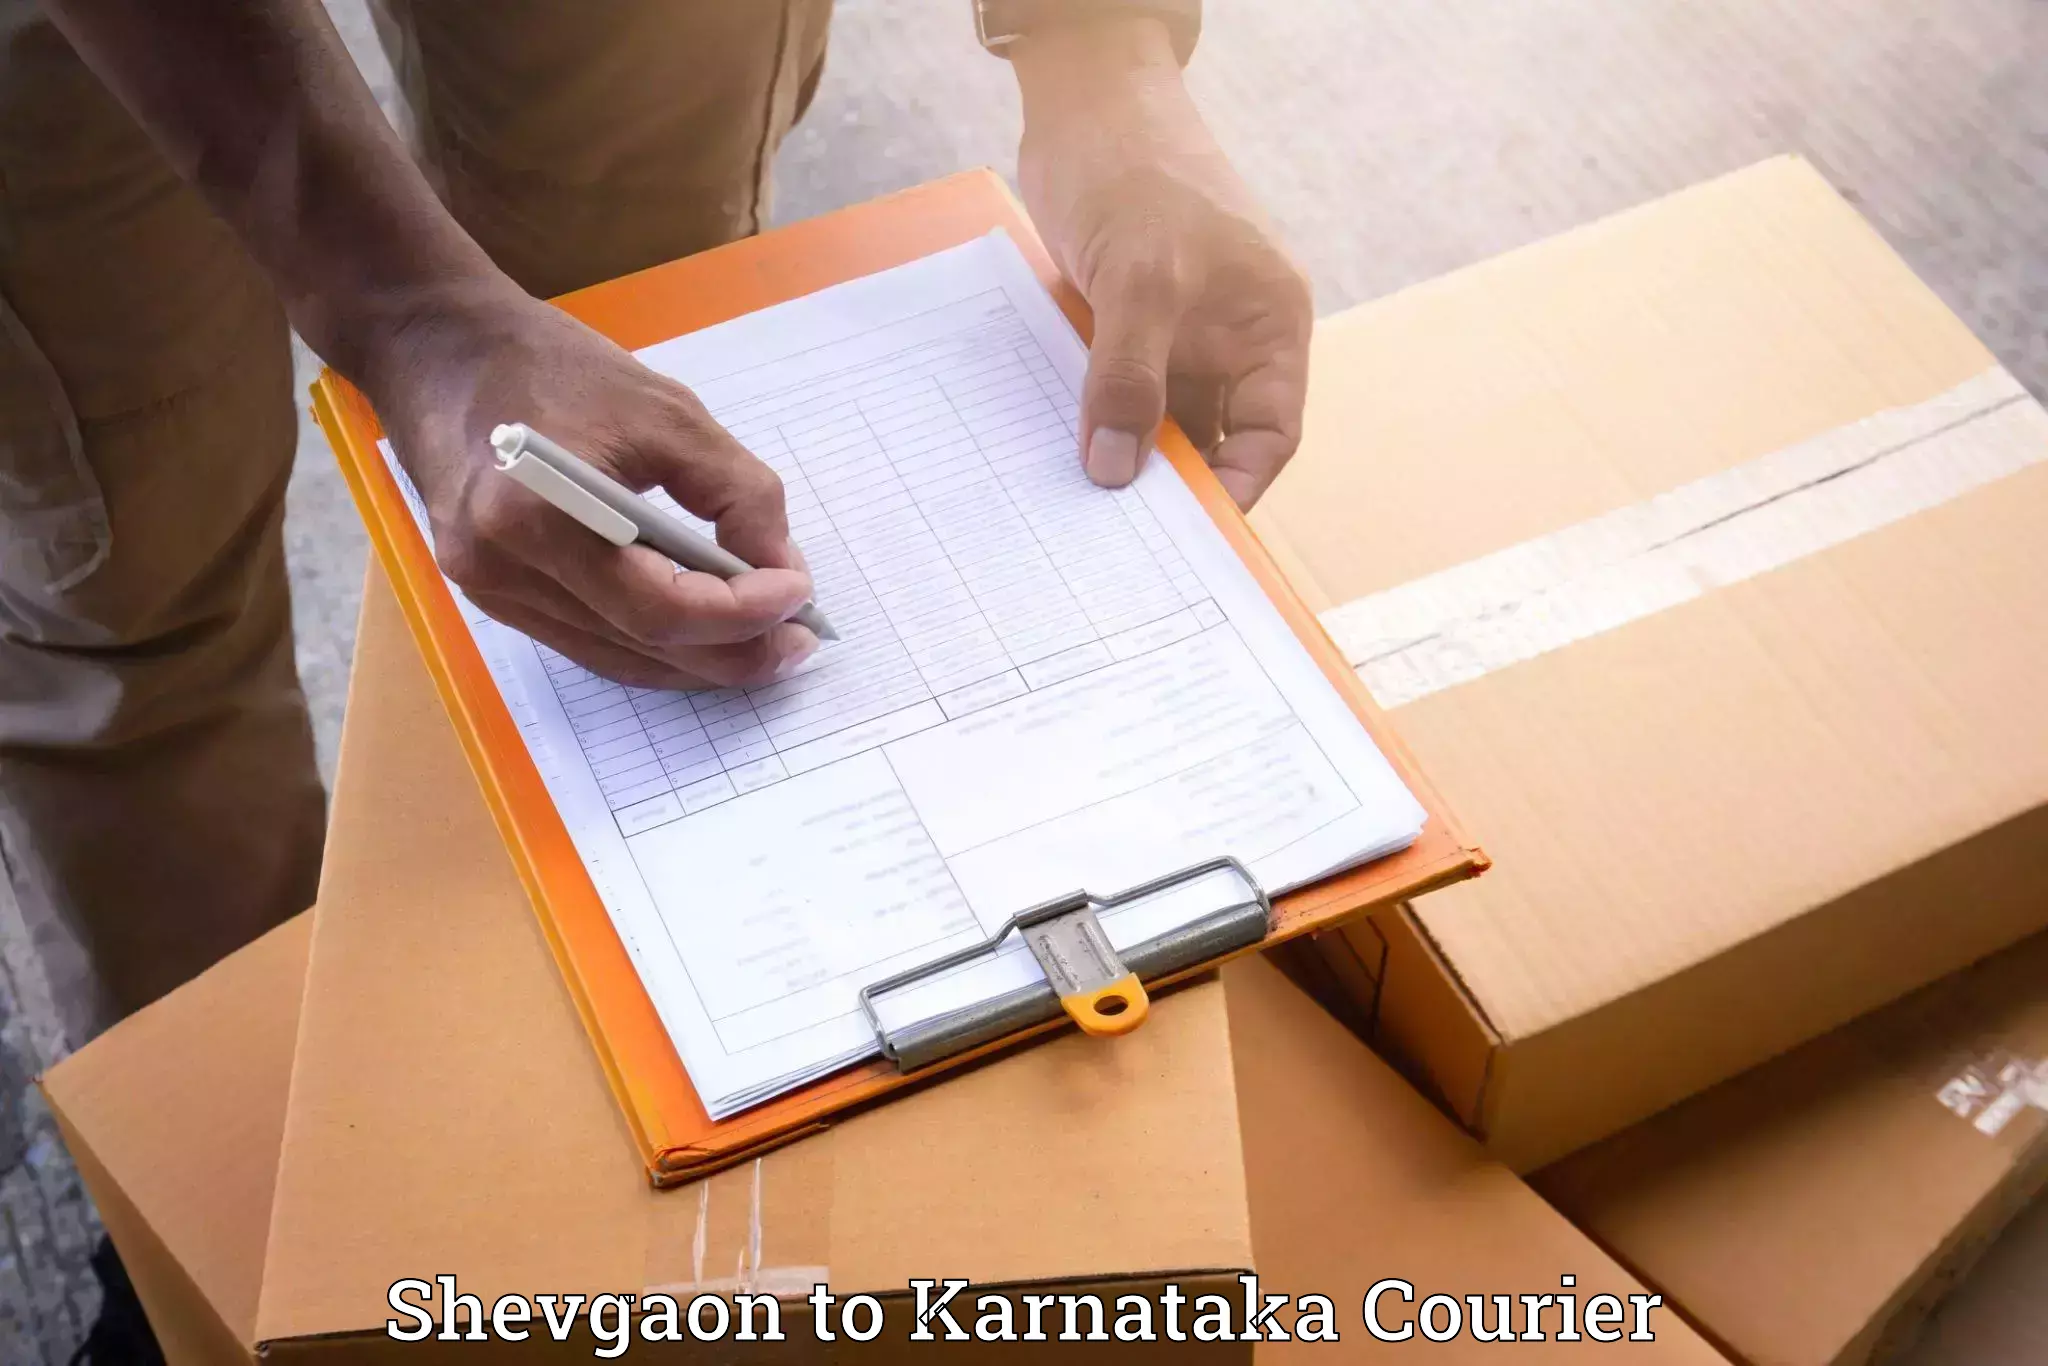 Furniture relocation experts Shevgaon to Kulshekar